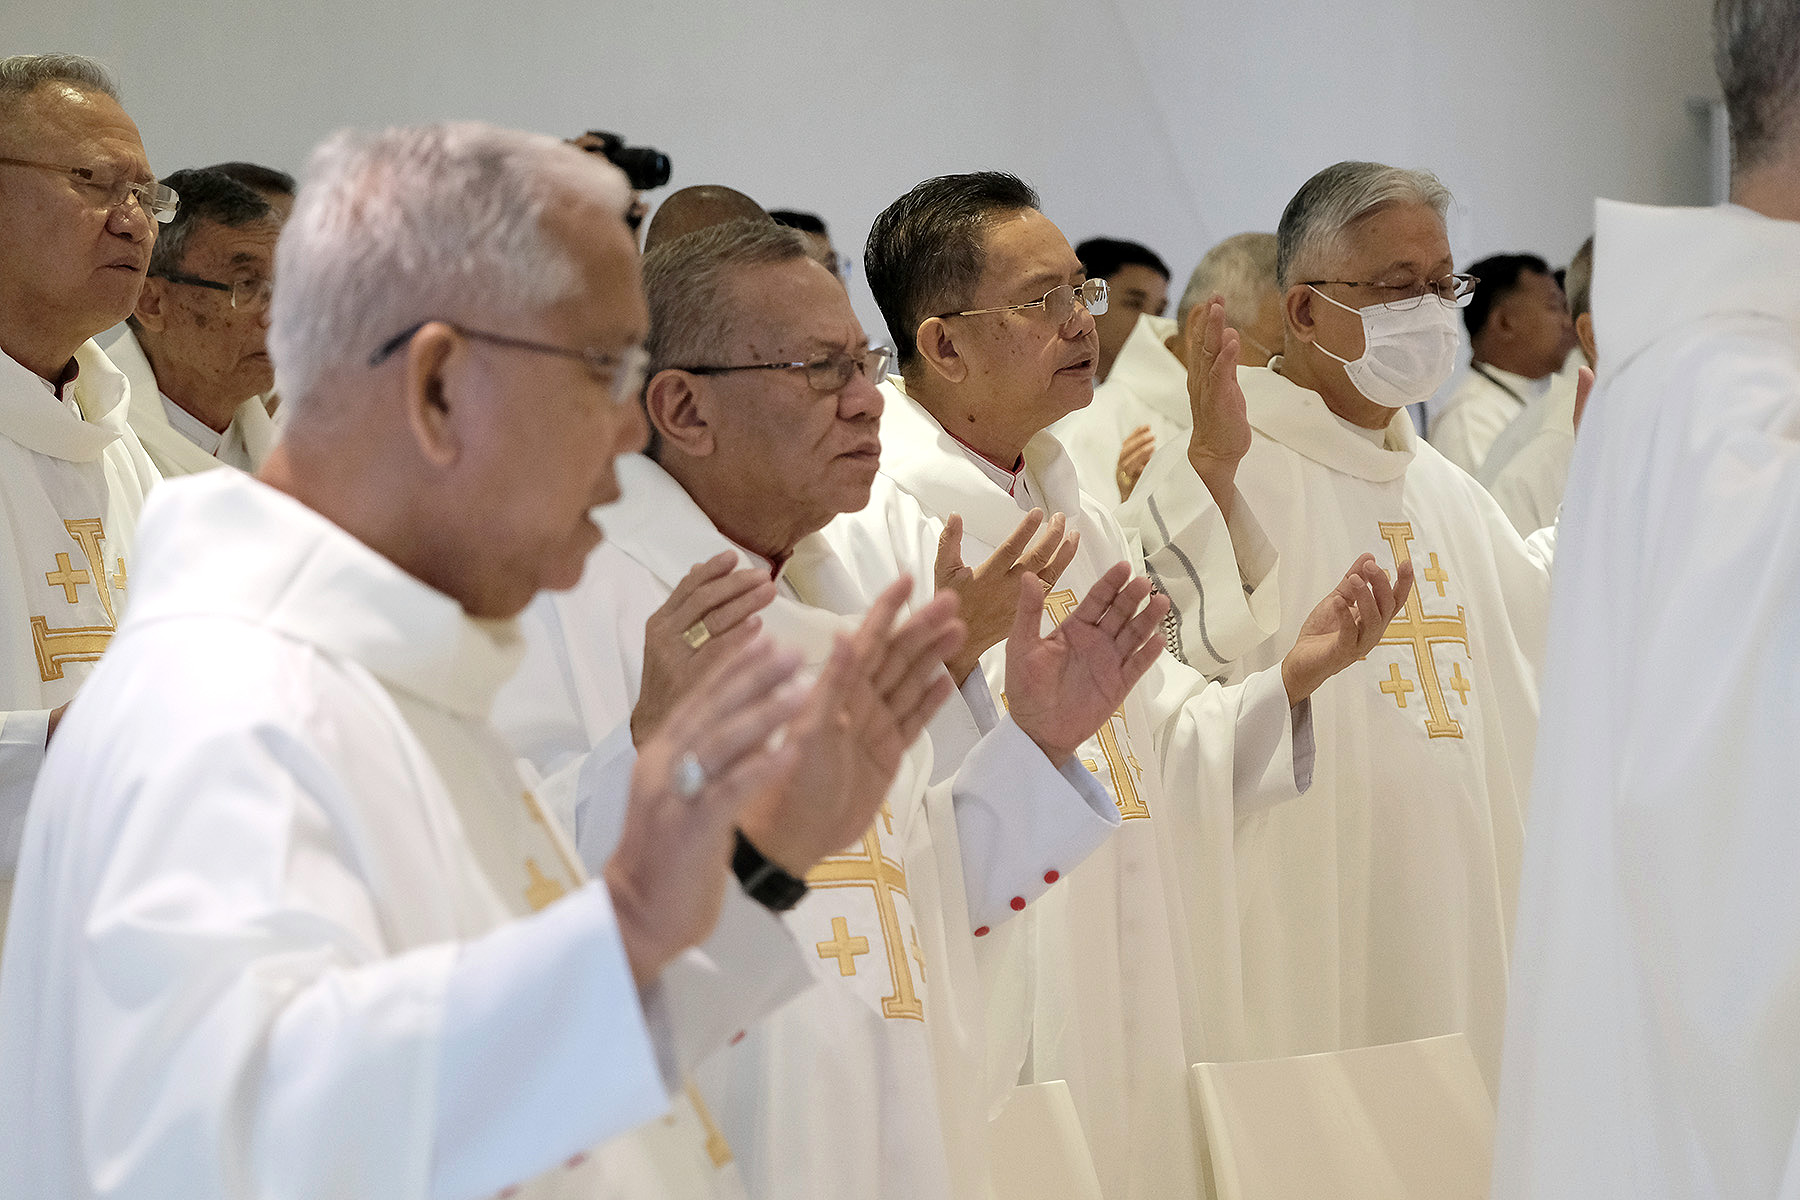 CBCP liturgy body clarifies hand posture during ‘Lord’s Prayer’